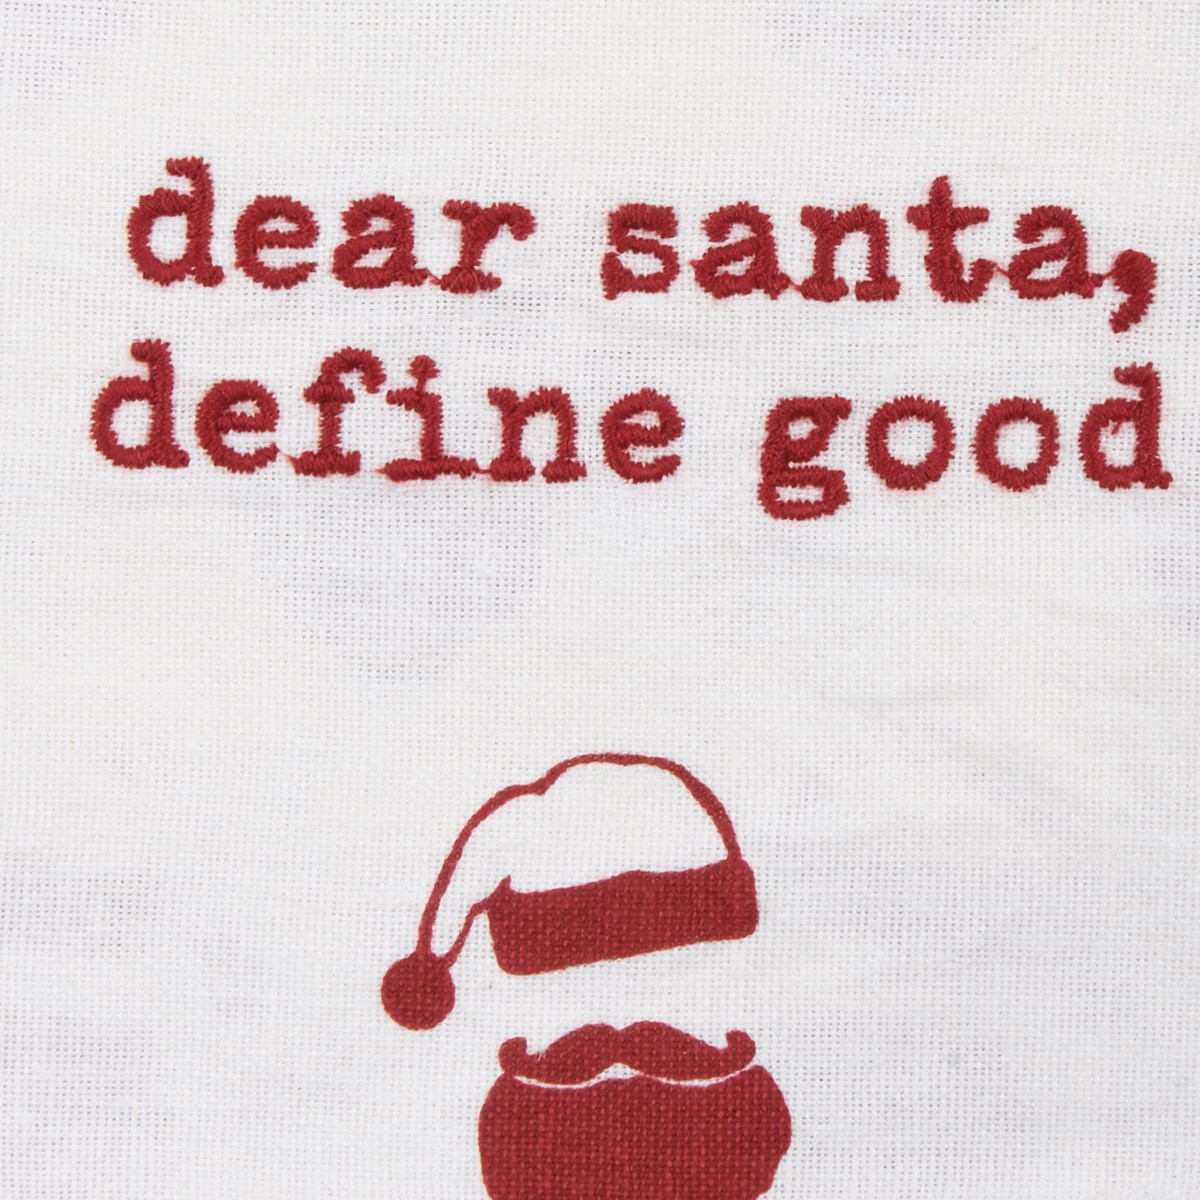 Dear Santa Define Good Kitchen Towel - Cotton, Linen